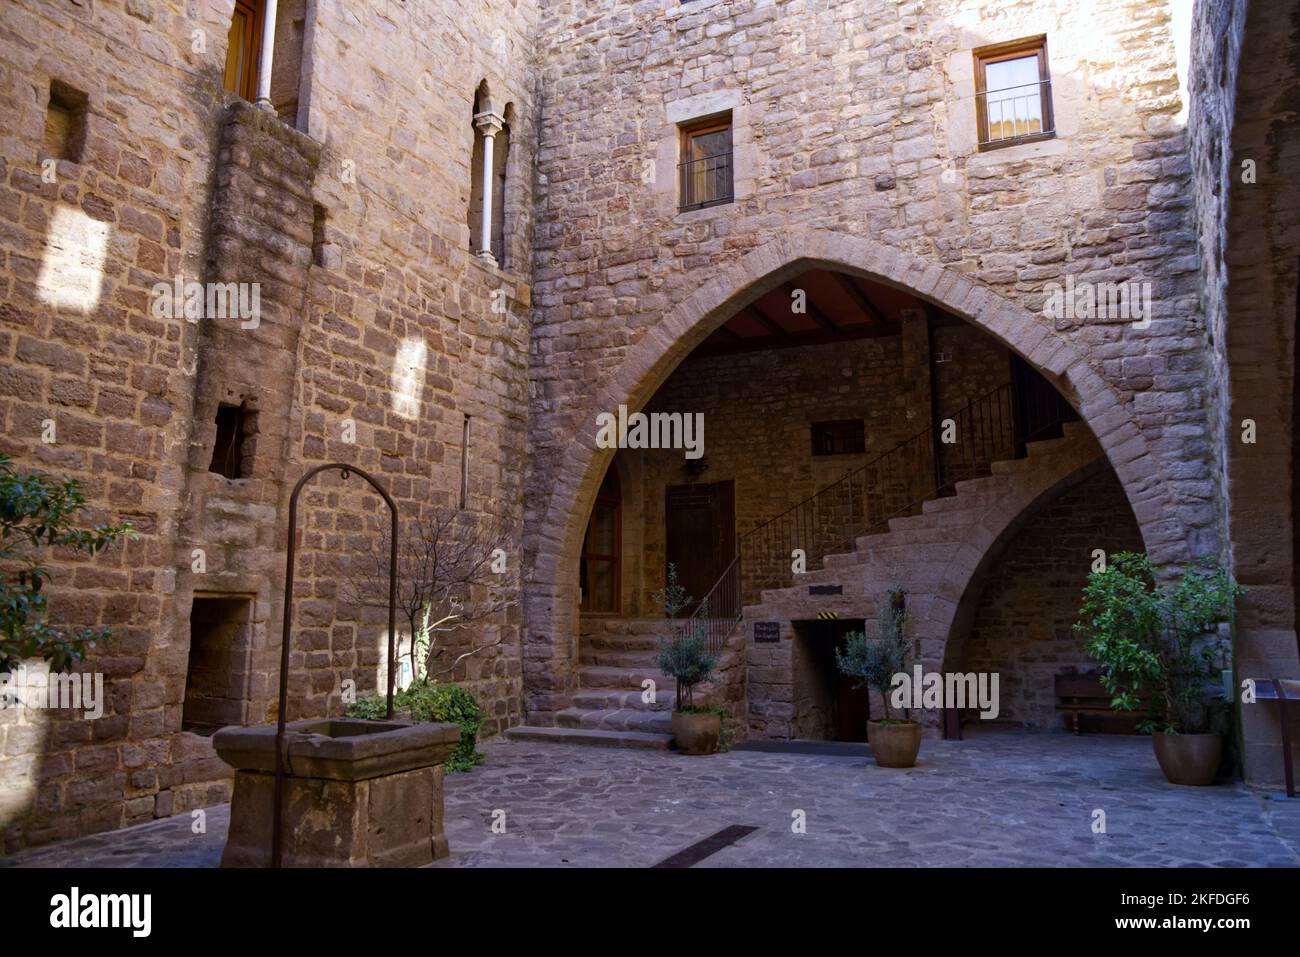 Spain - Castell de Cardona Courtyard Stock Photo